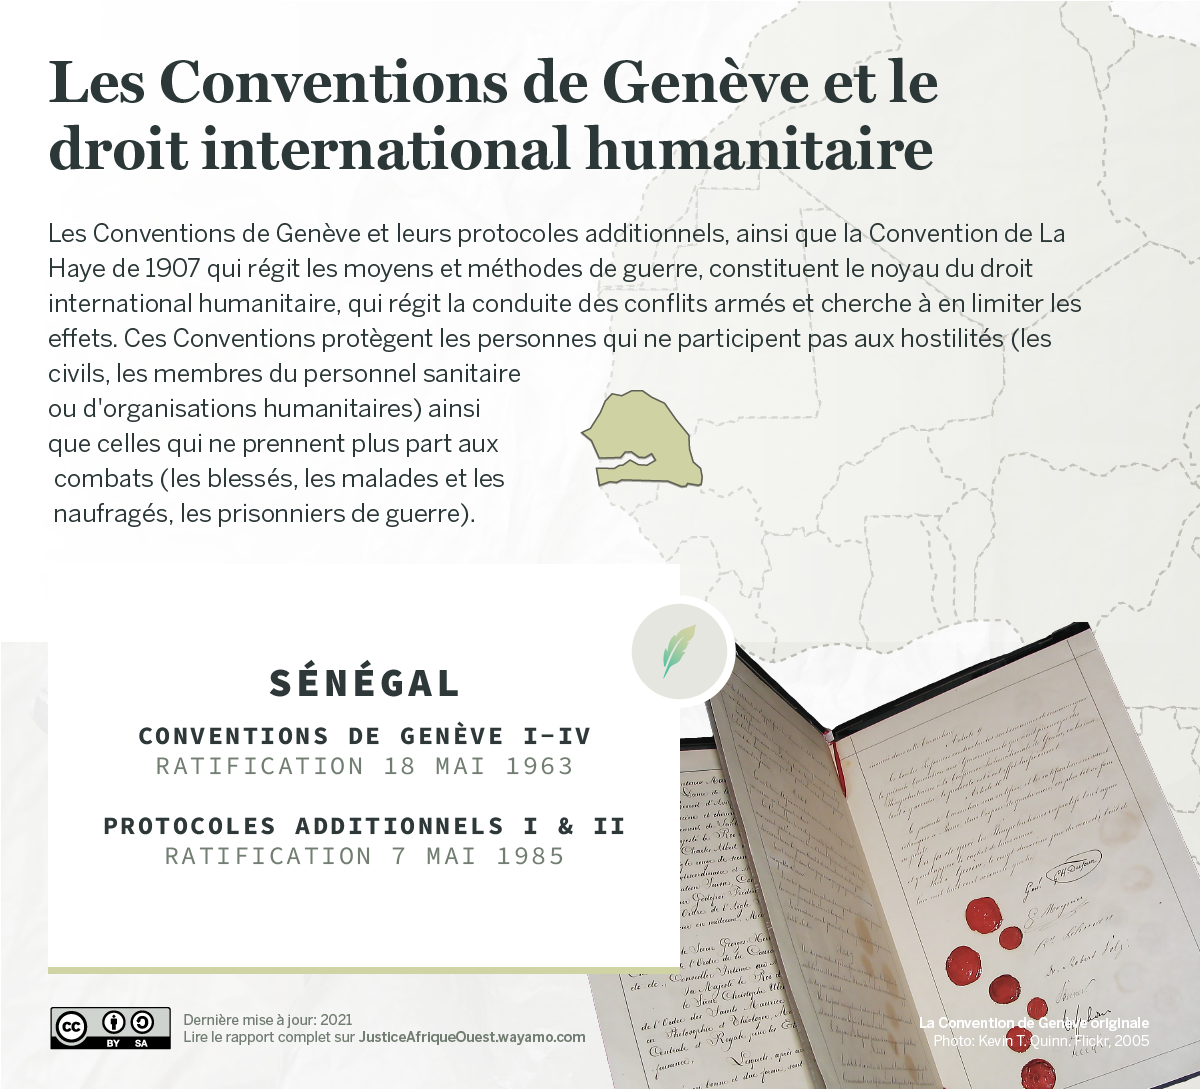 SENEGAL_Conventions de Genève - Wayamo Foundation (CC BY-SA 4.0)